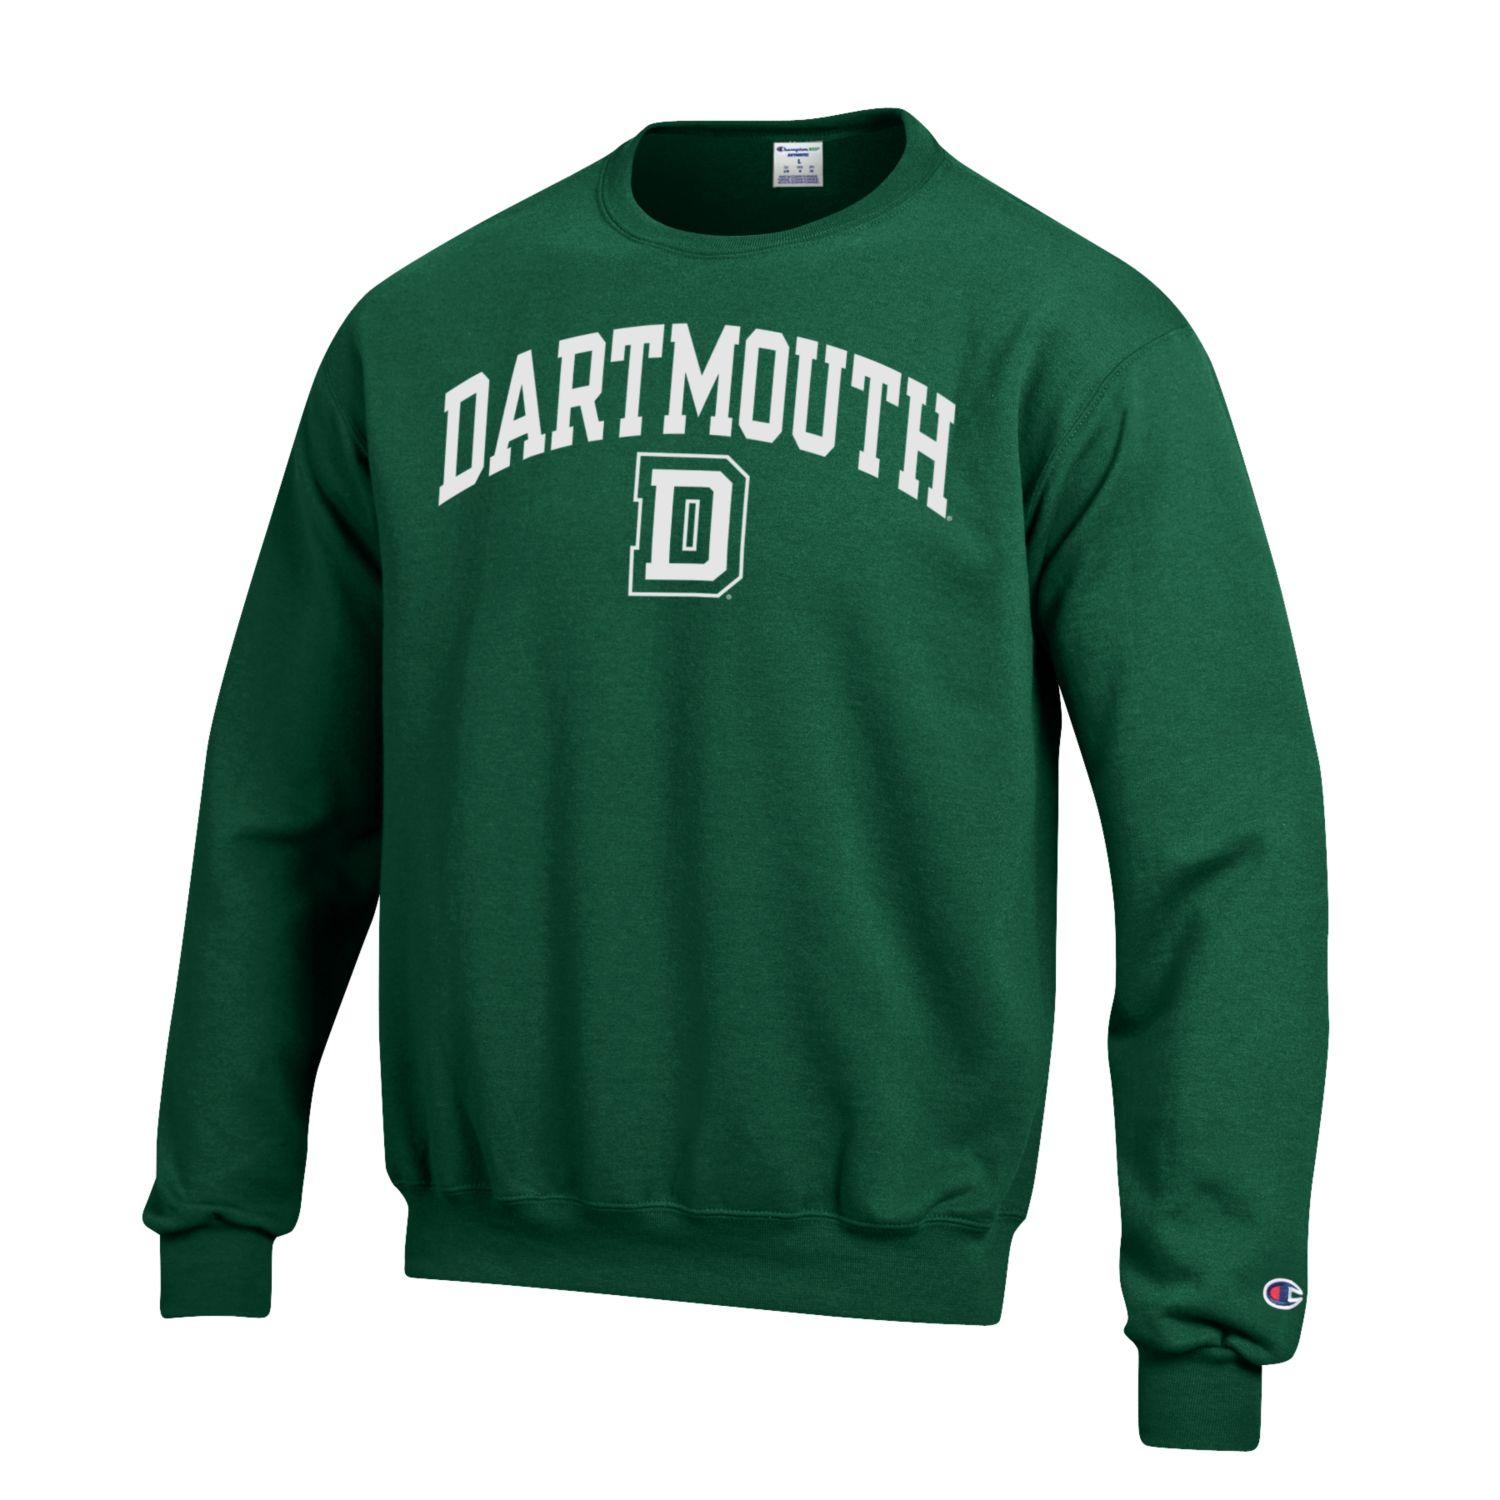 dartmouth champion sweatshirt